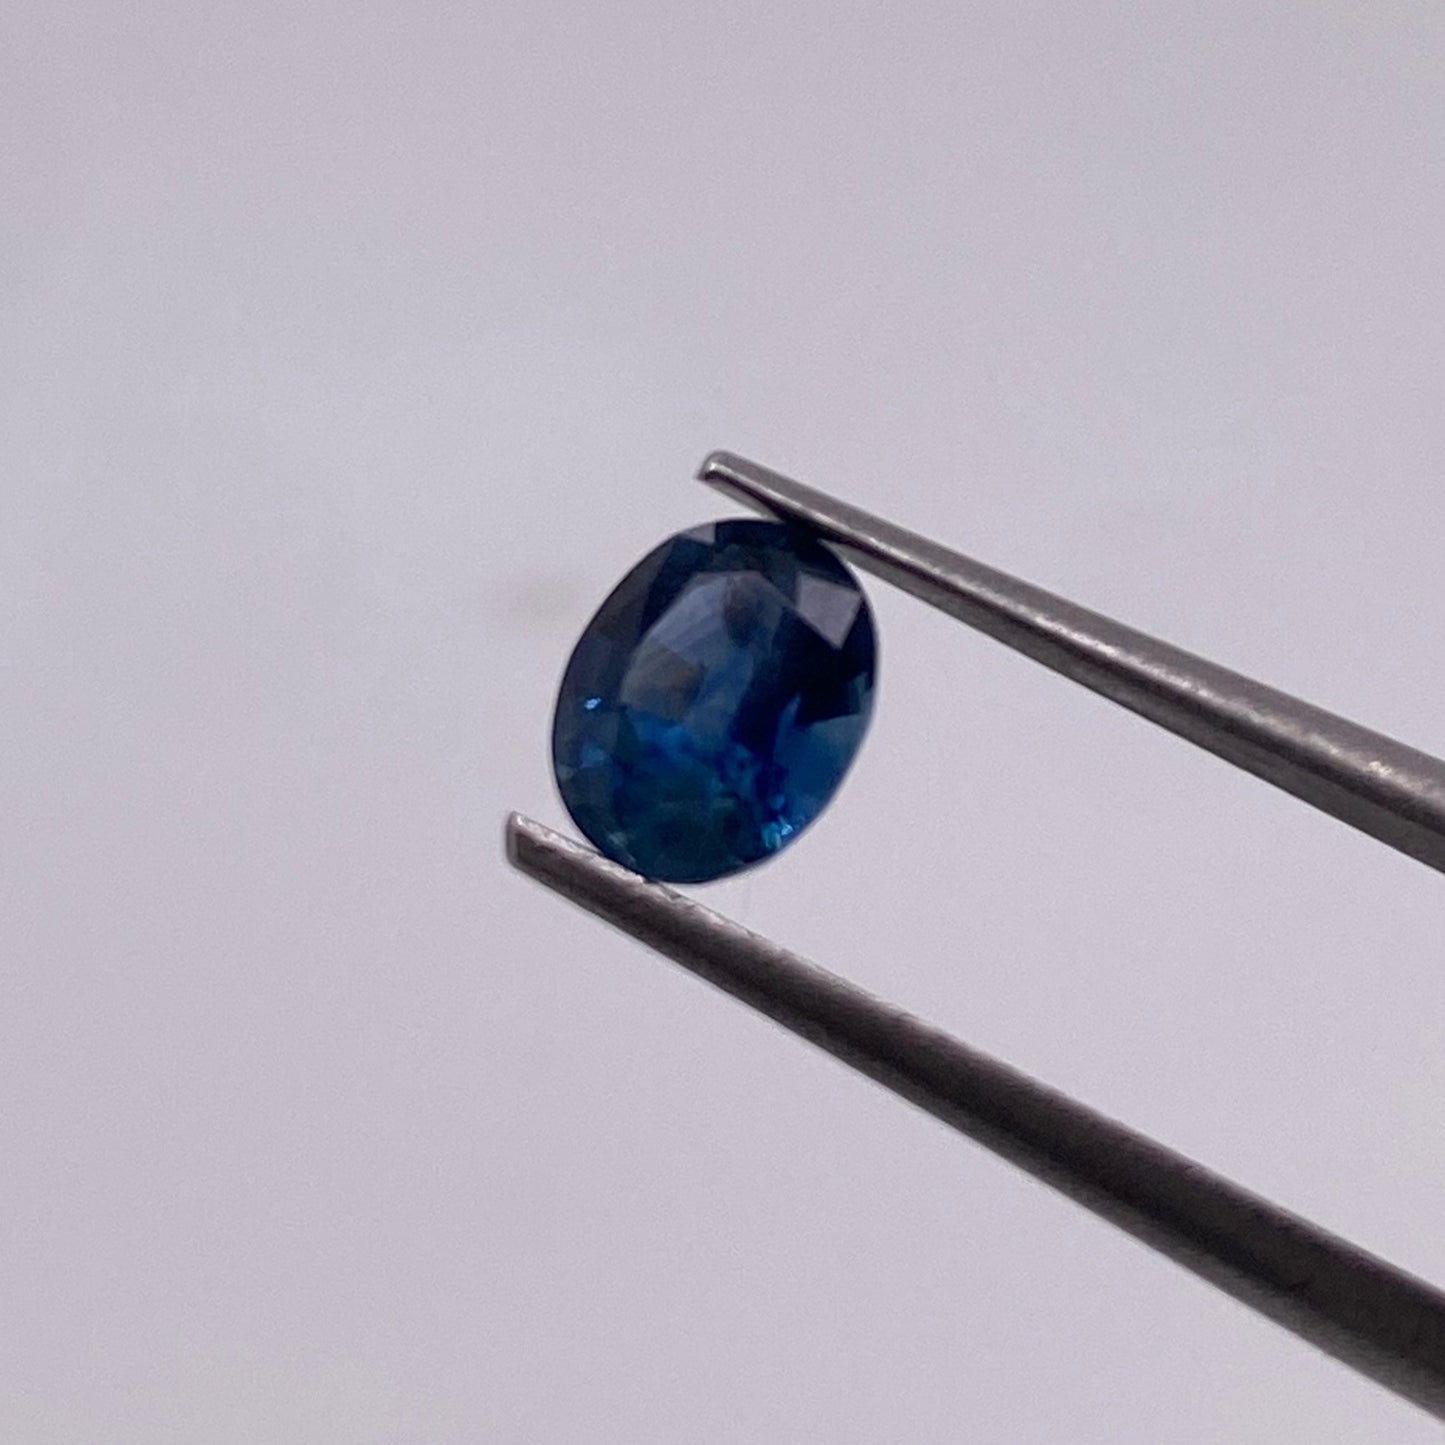 Zafiro Azul Corte Oval de 0.79ct / Medidas 6 x 4.78mm